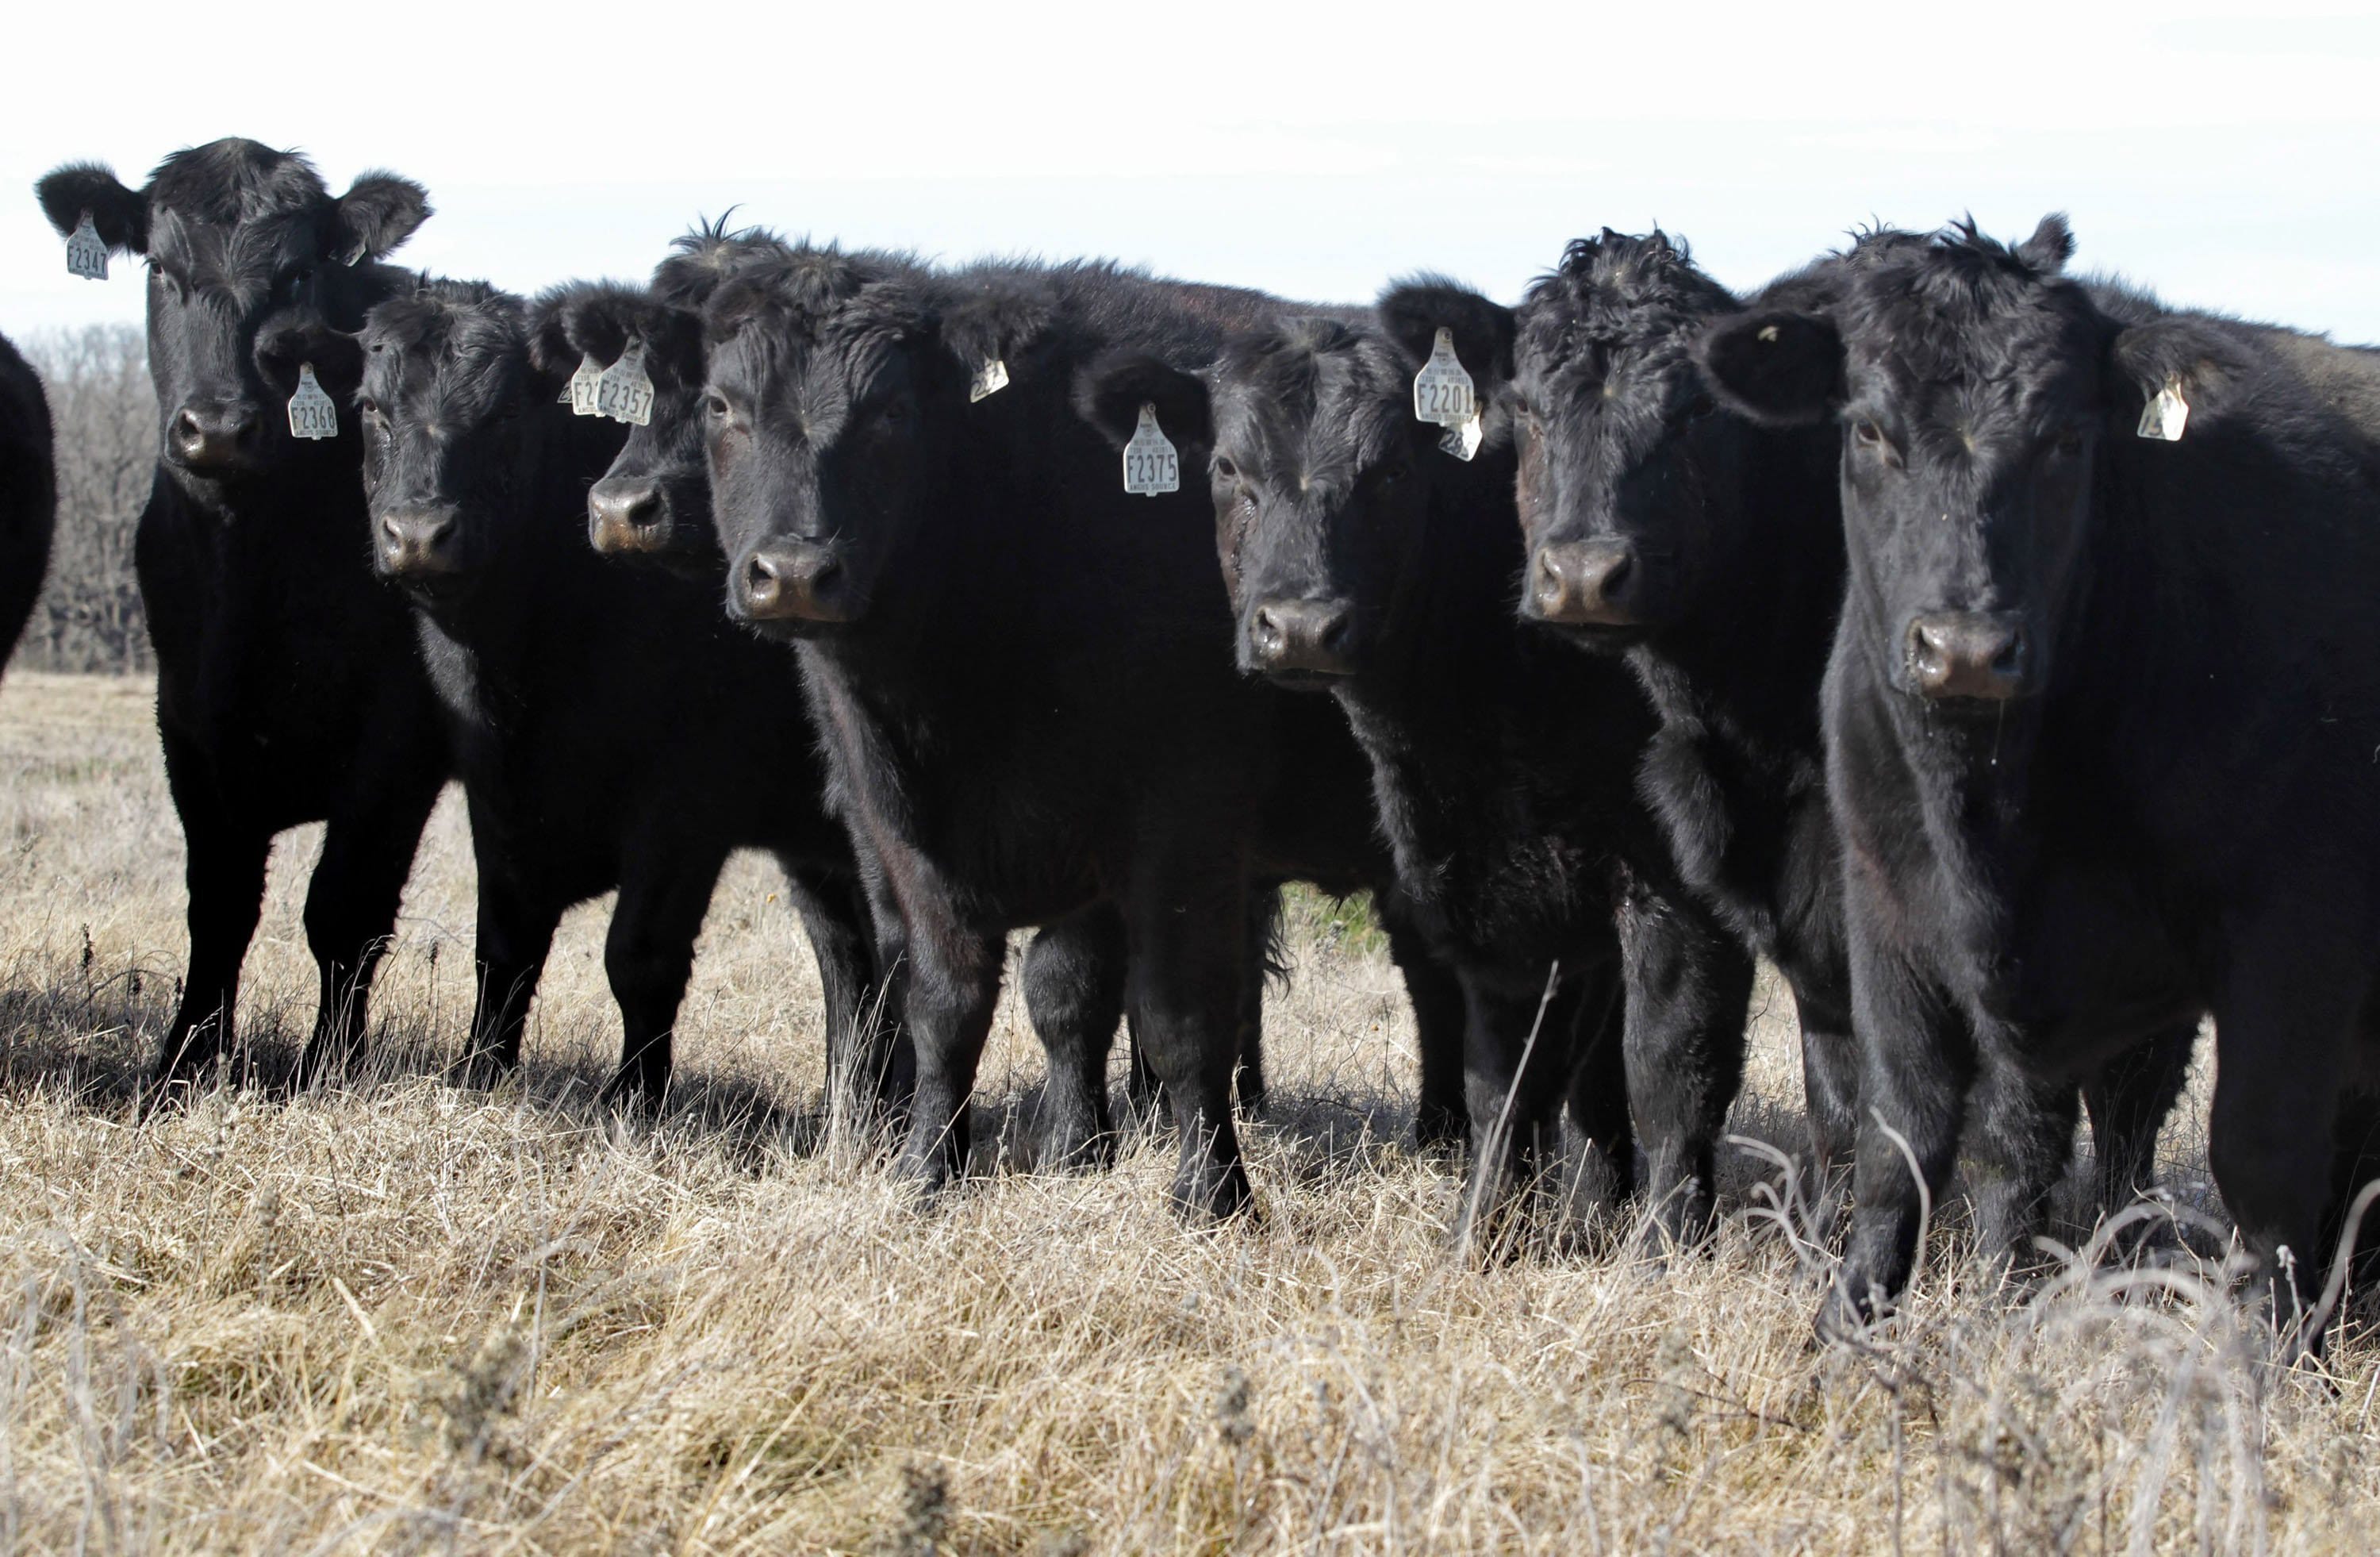 Jon Taggart raises cattle on native range grass on his ranch near Grandview, Texas.